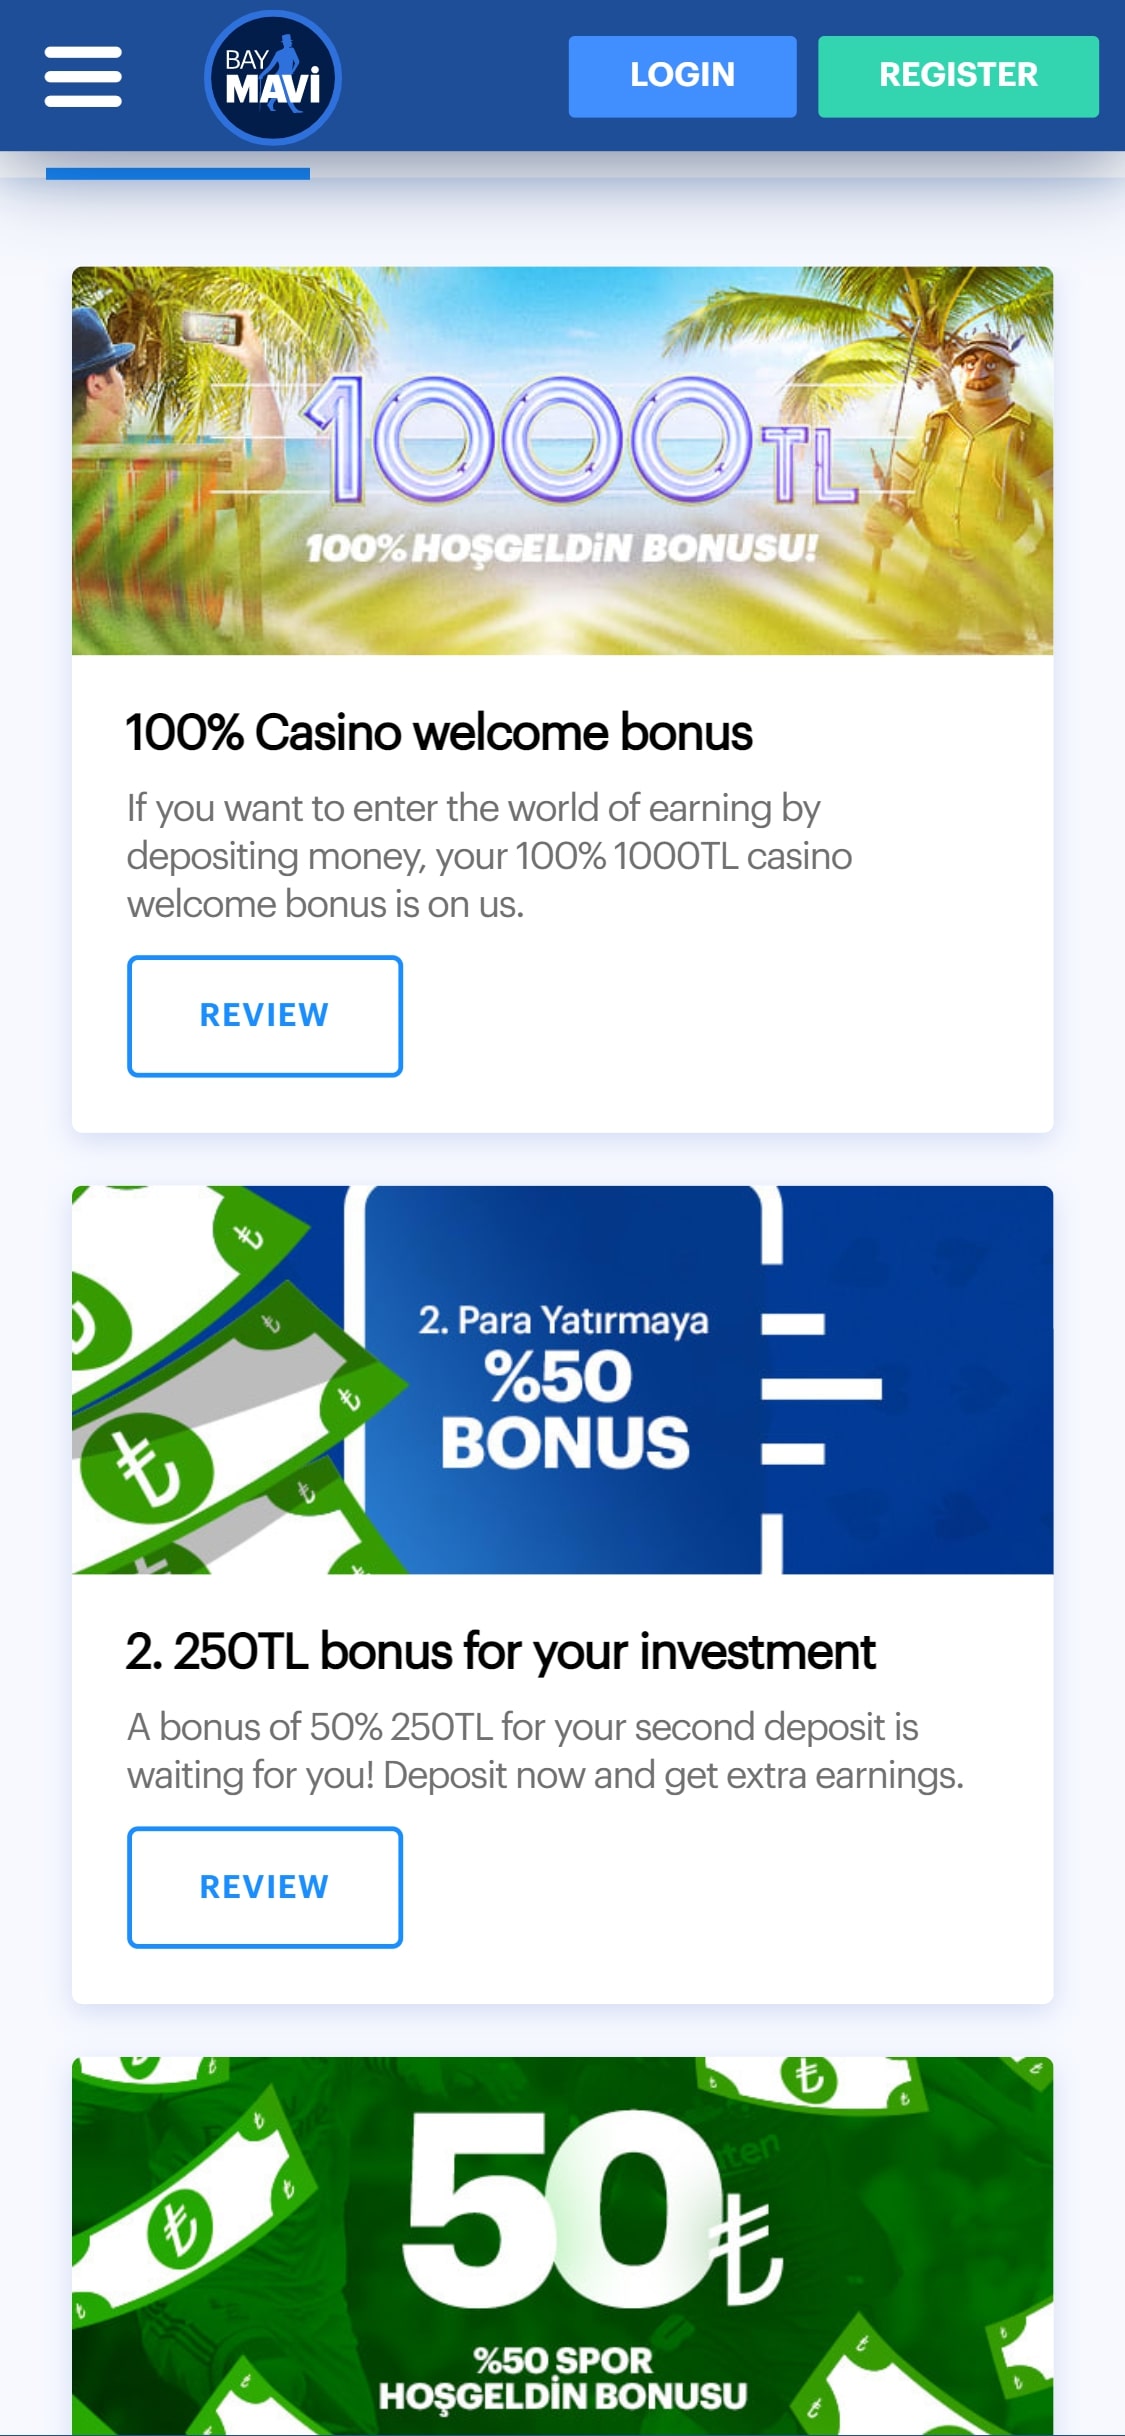 BayMavi Casino Mobile No Deposit Bonus Review